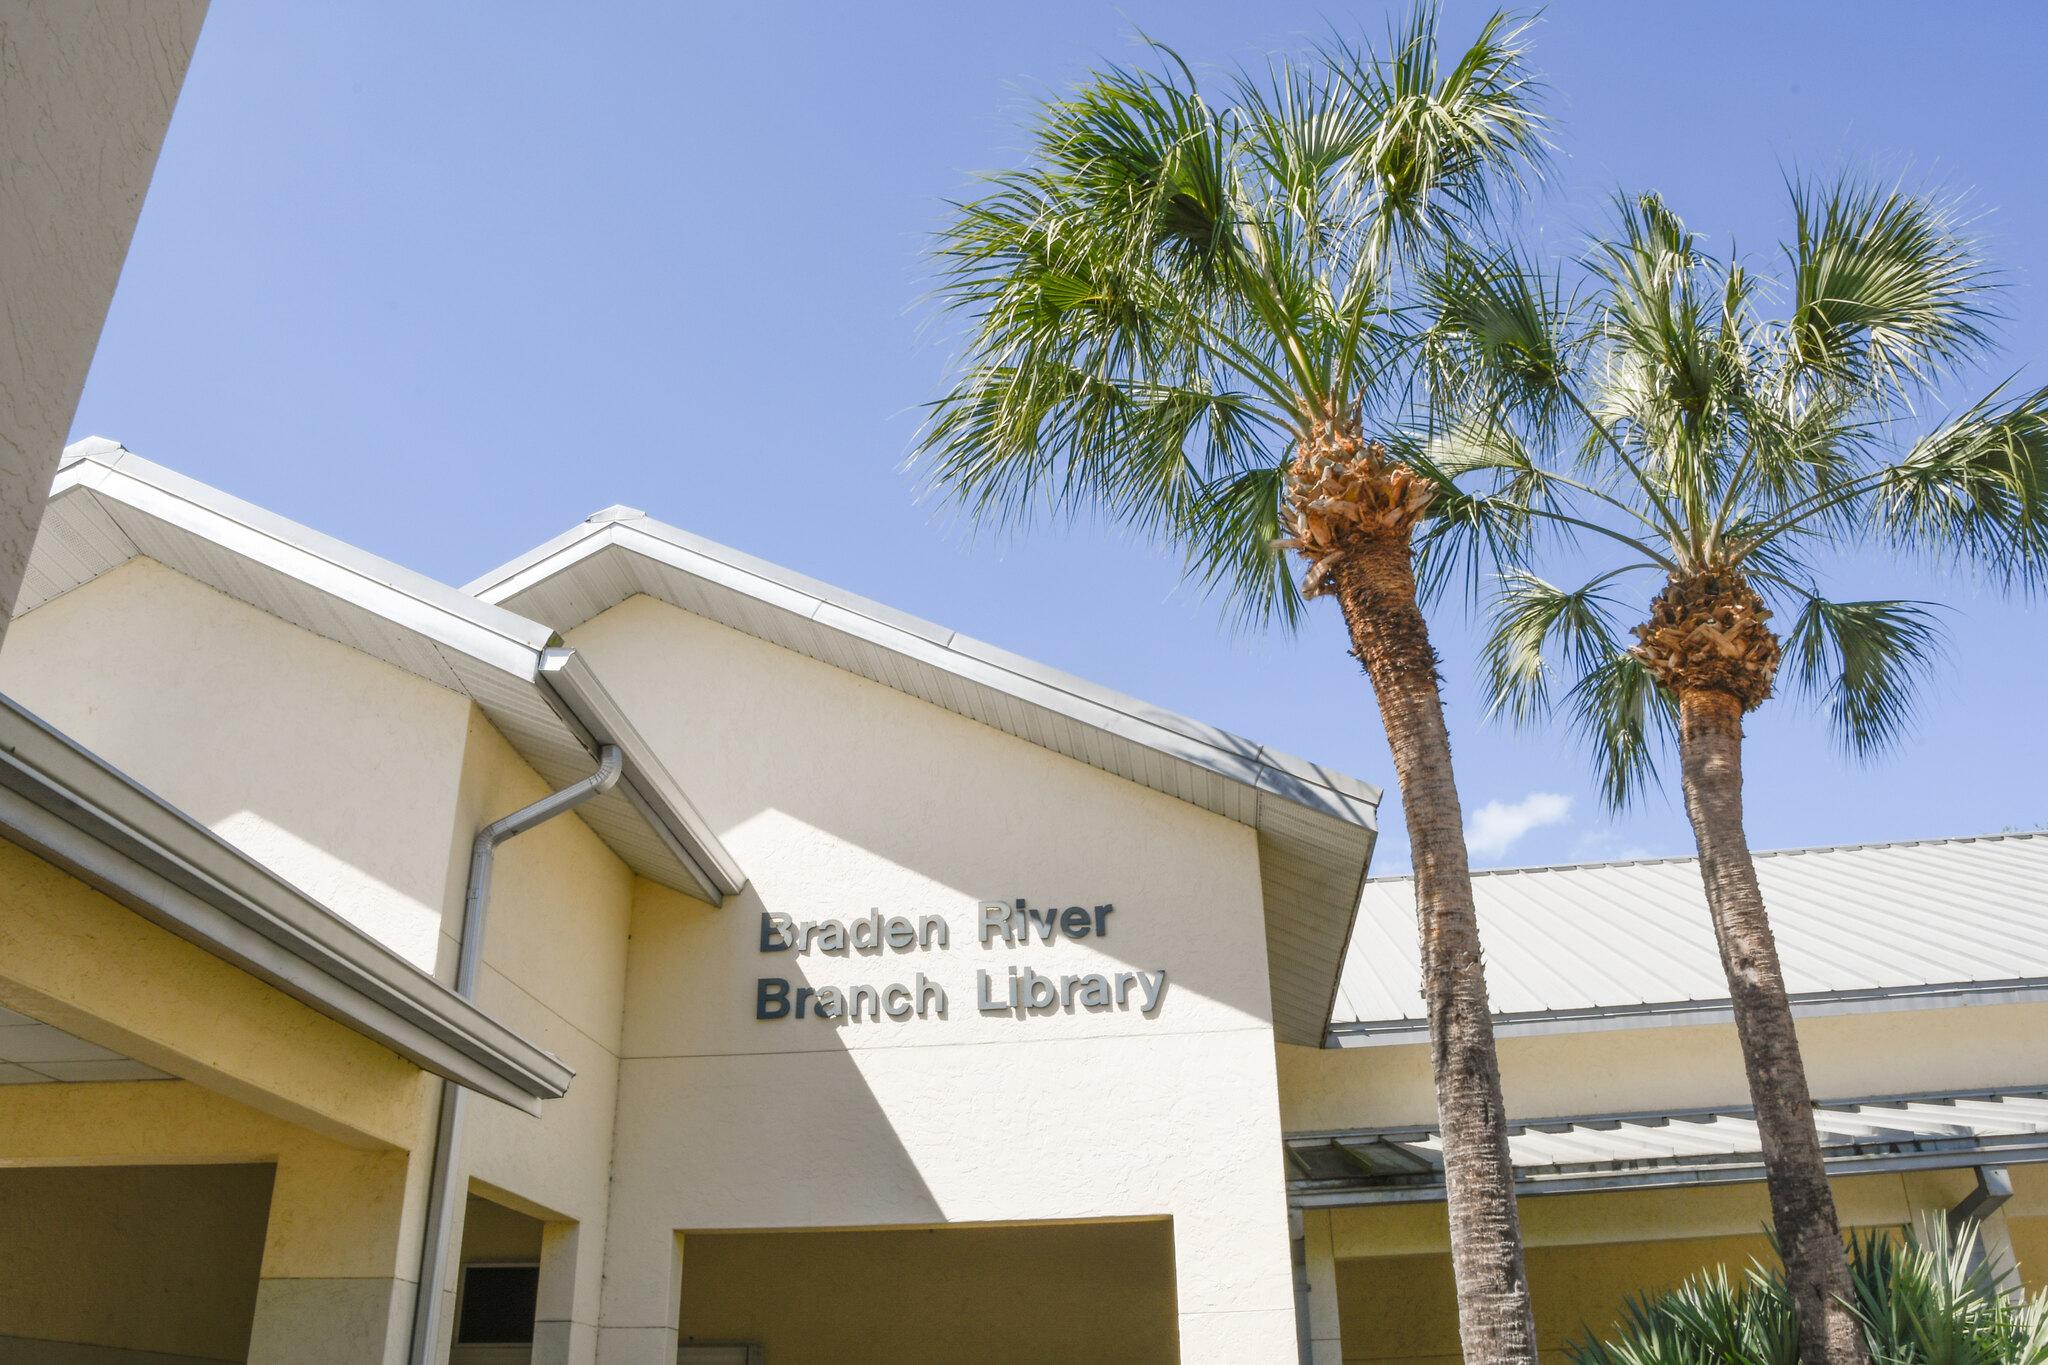 Braden River Library